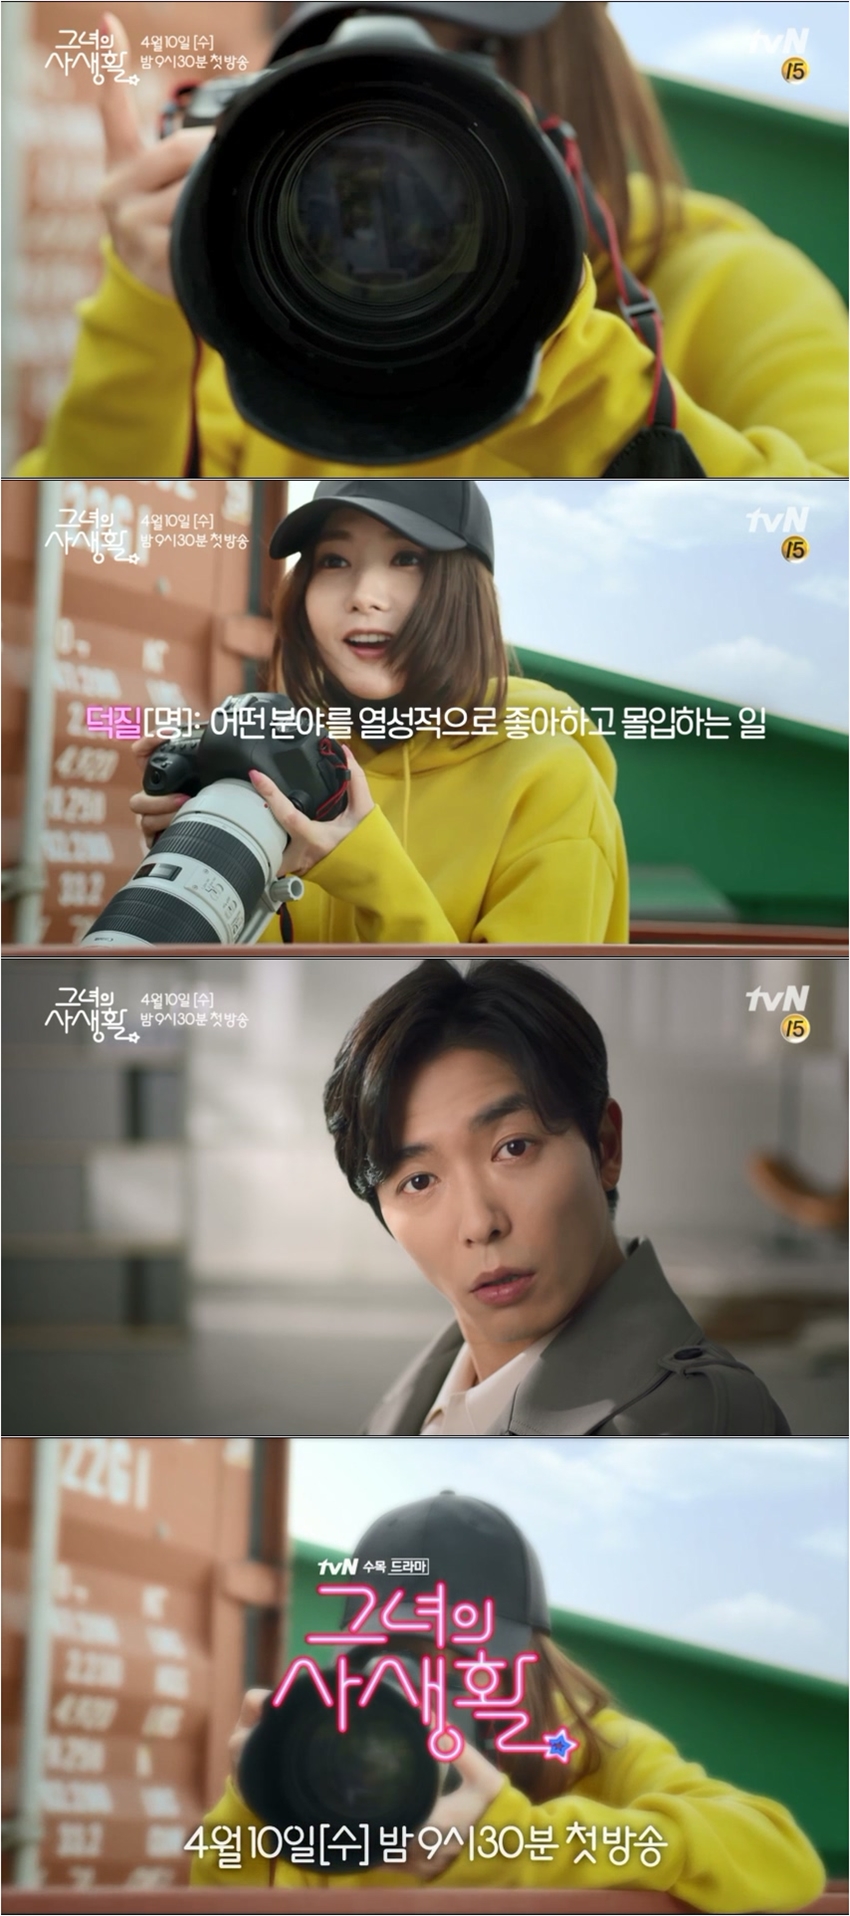 tvN 그녀의 사생활 티저 영상 캡처